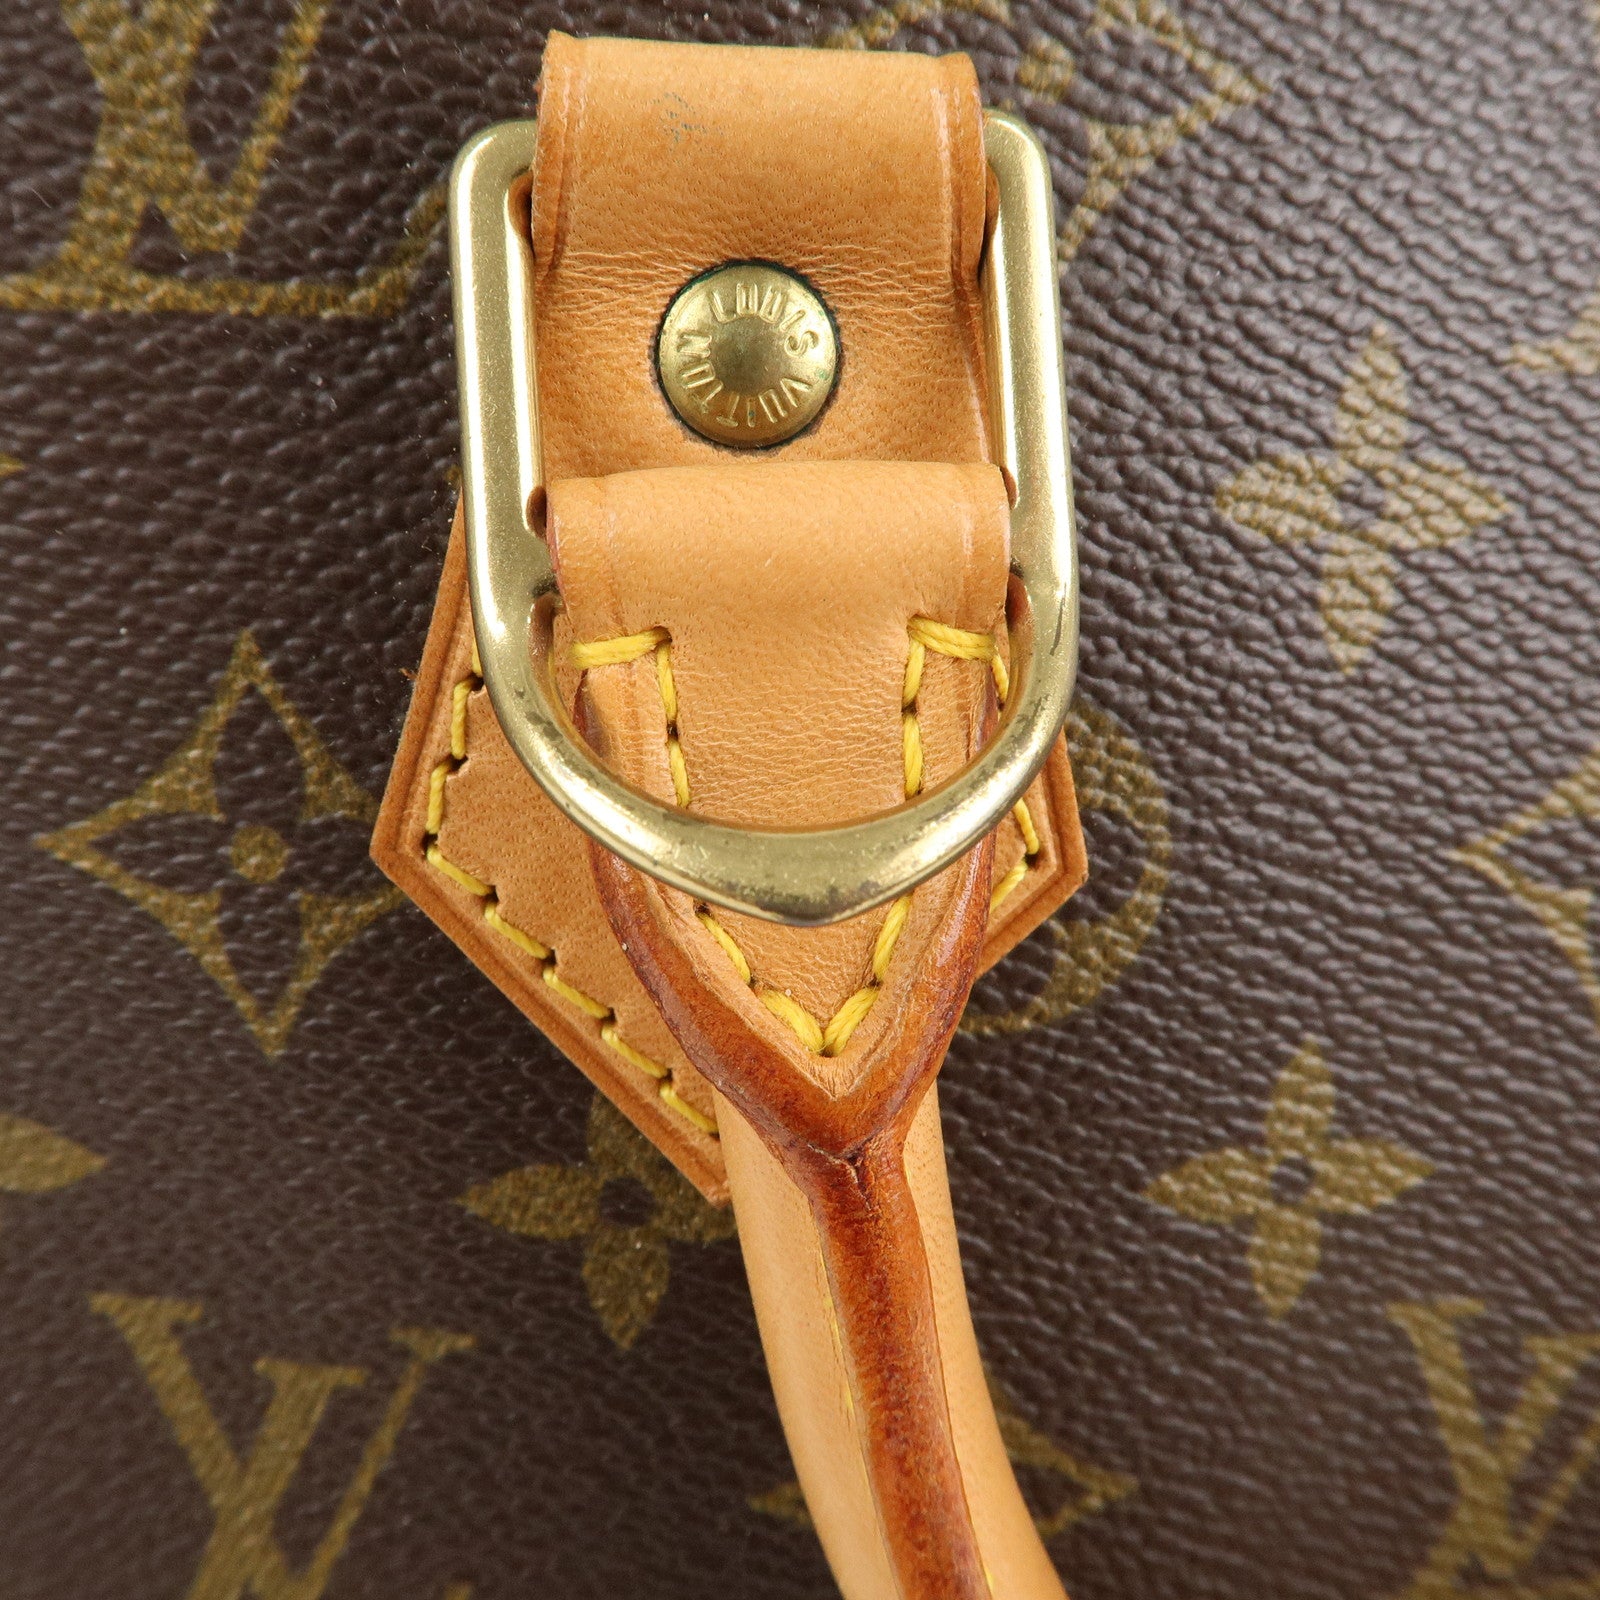 LOUIS VUITTON Handbag M51130 Alma PM Monogram Brown black Customized –